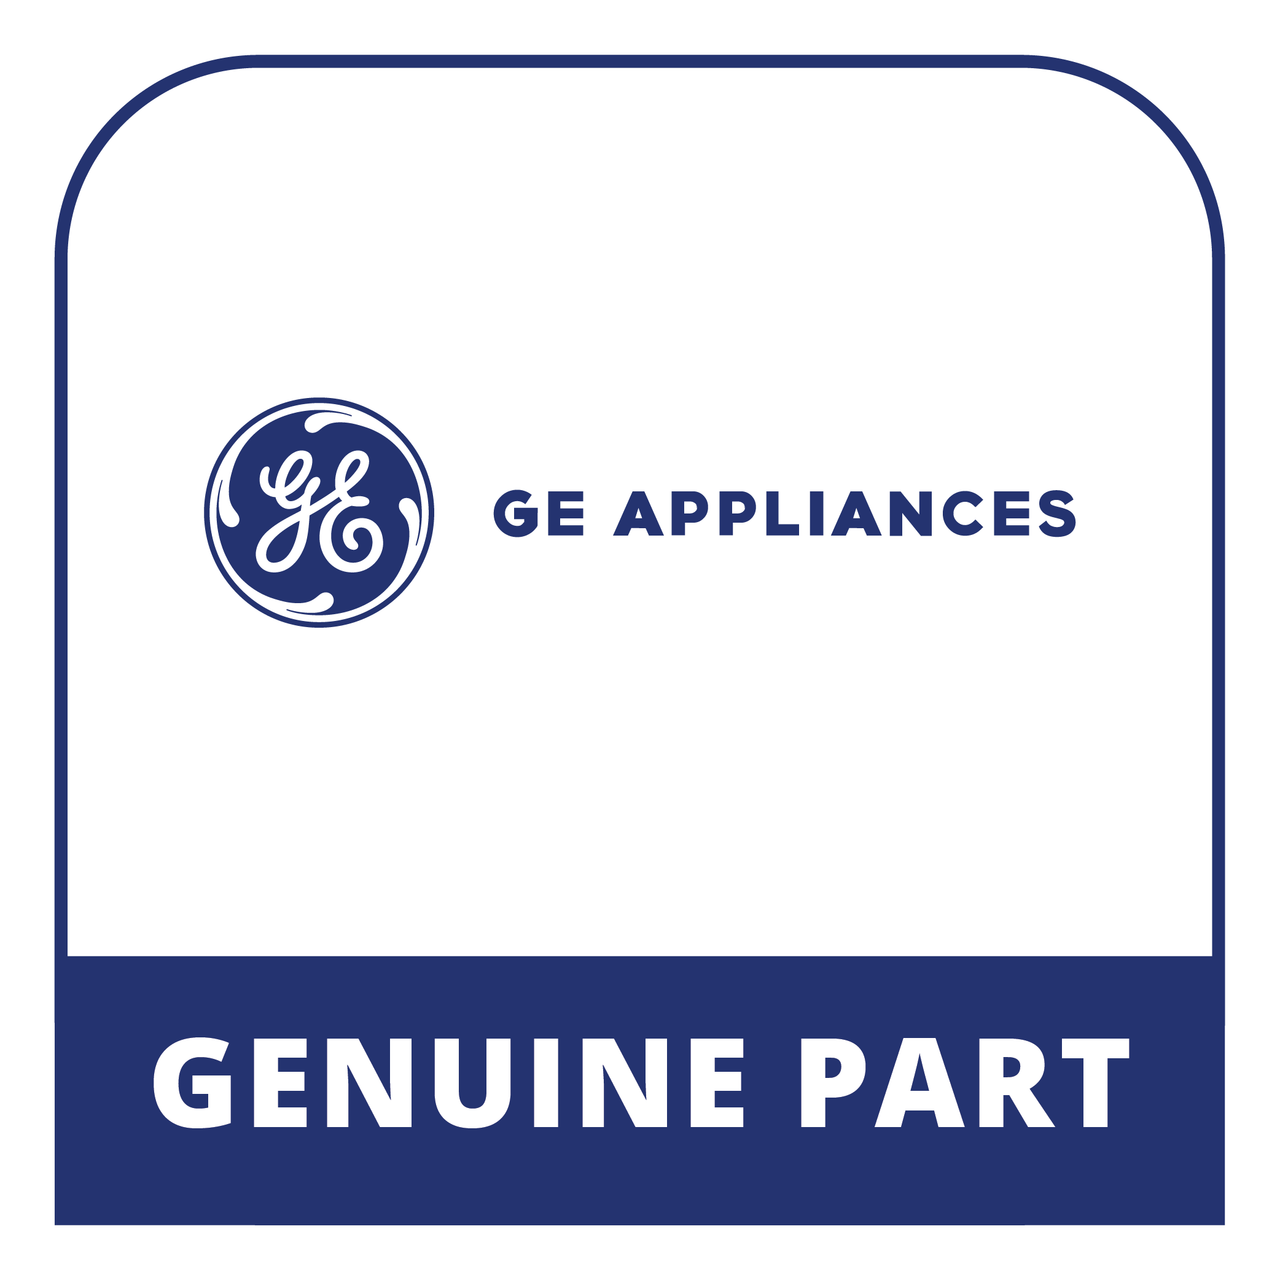 GE Appliances WB30X43560 - Bridge Heating Element Replacement Kit - Genuine Part